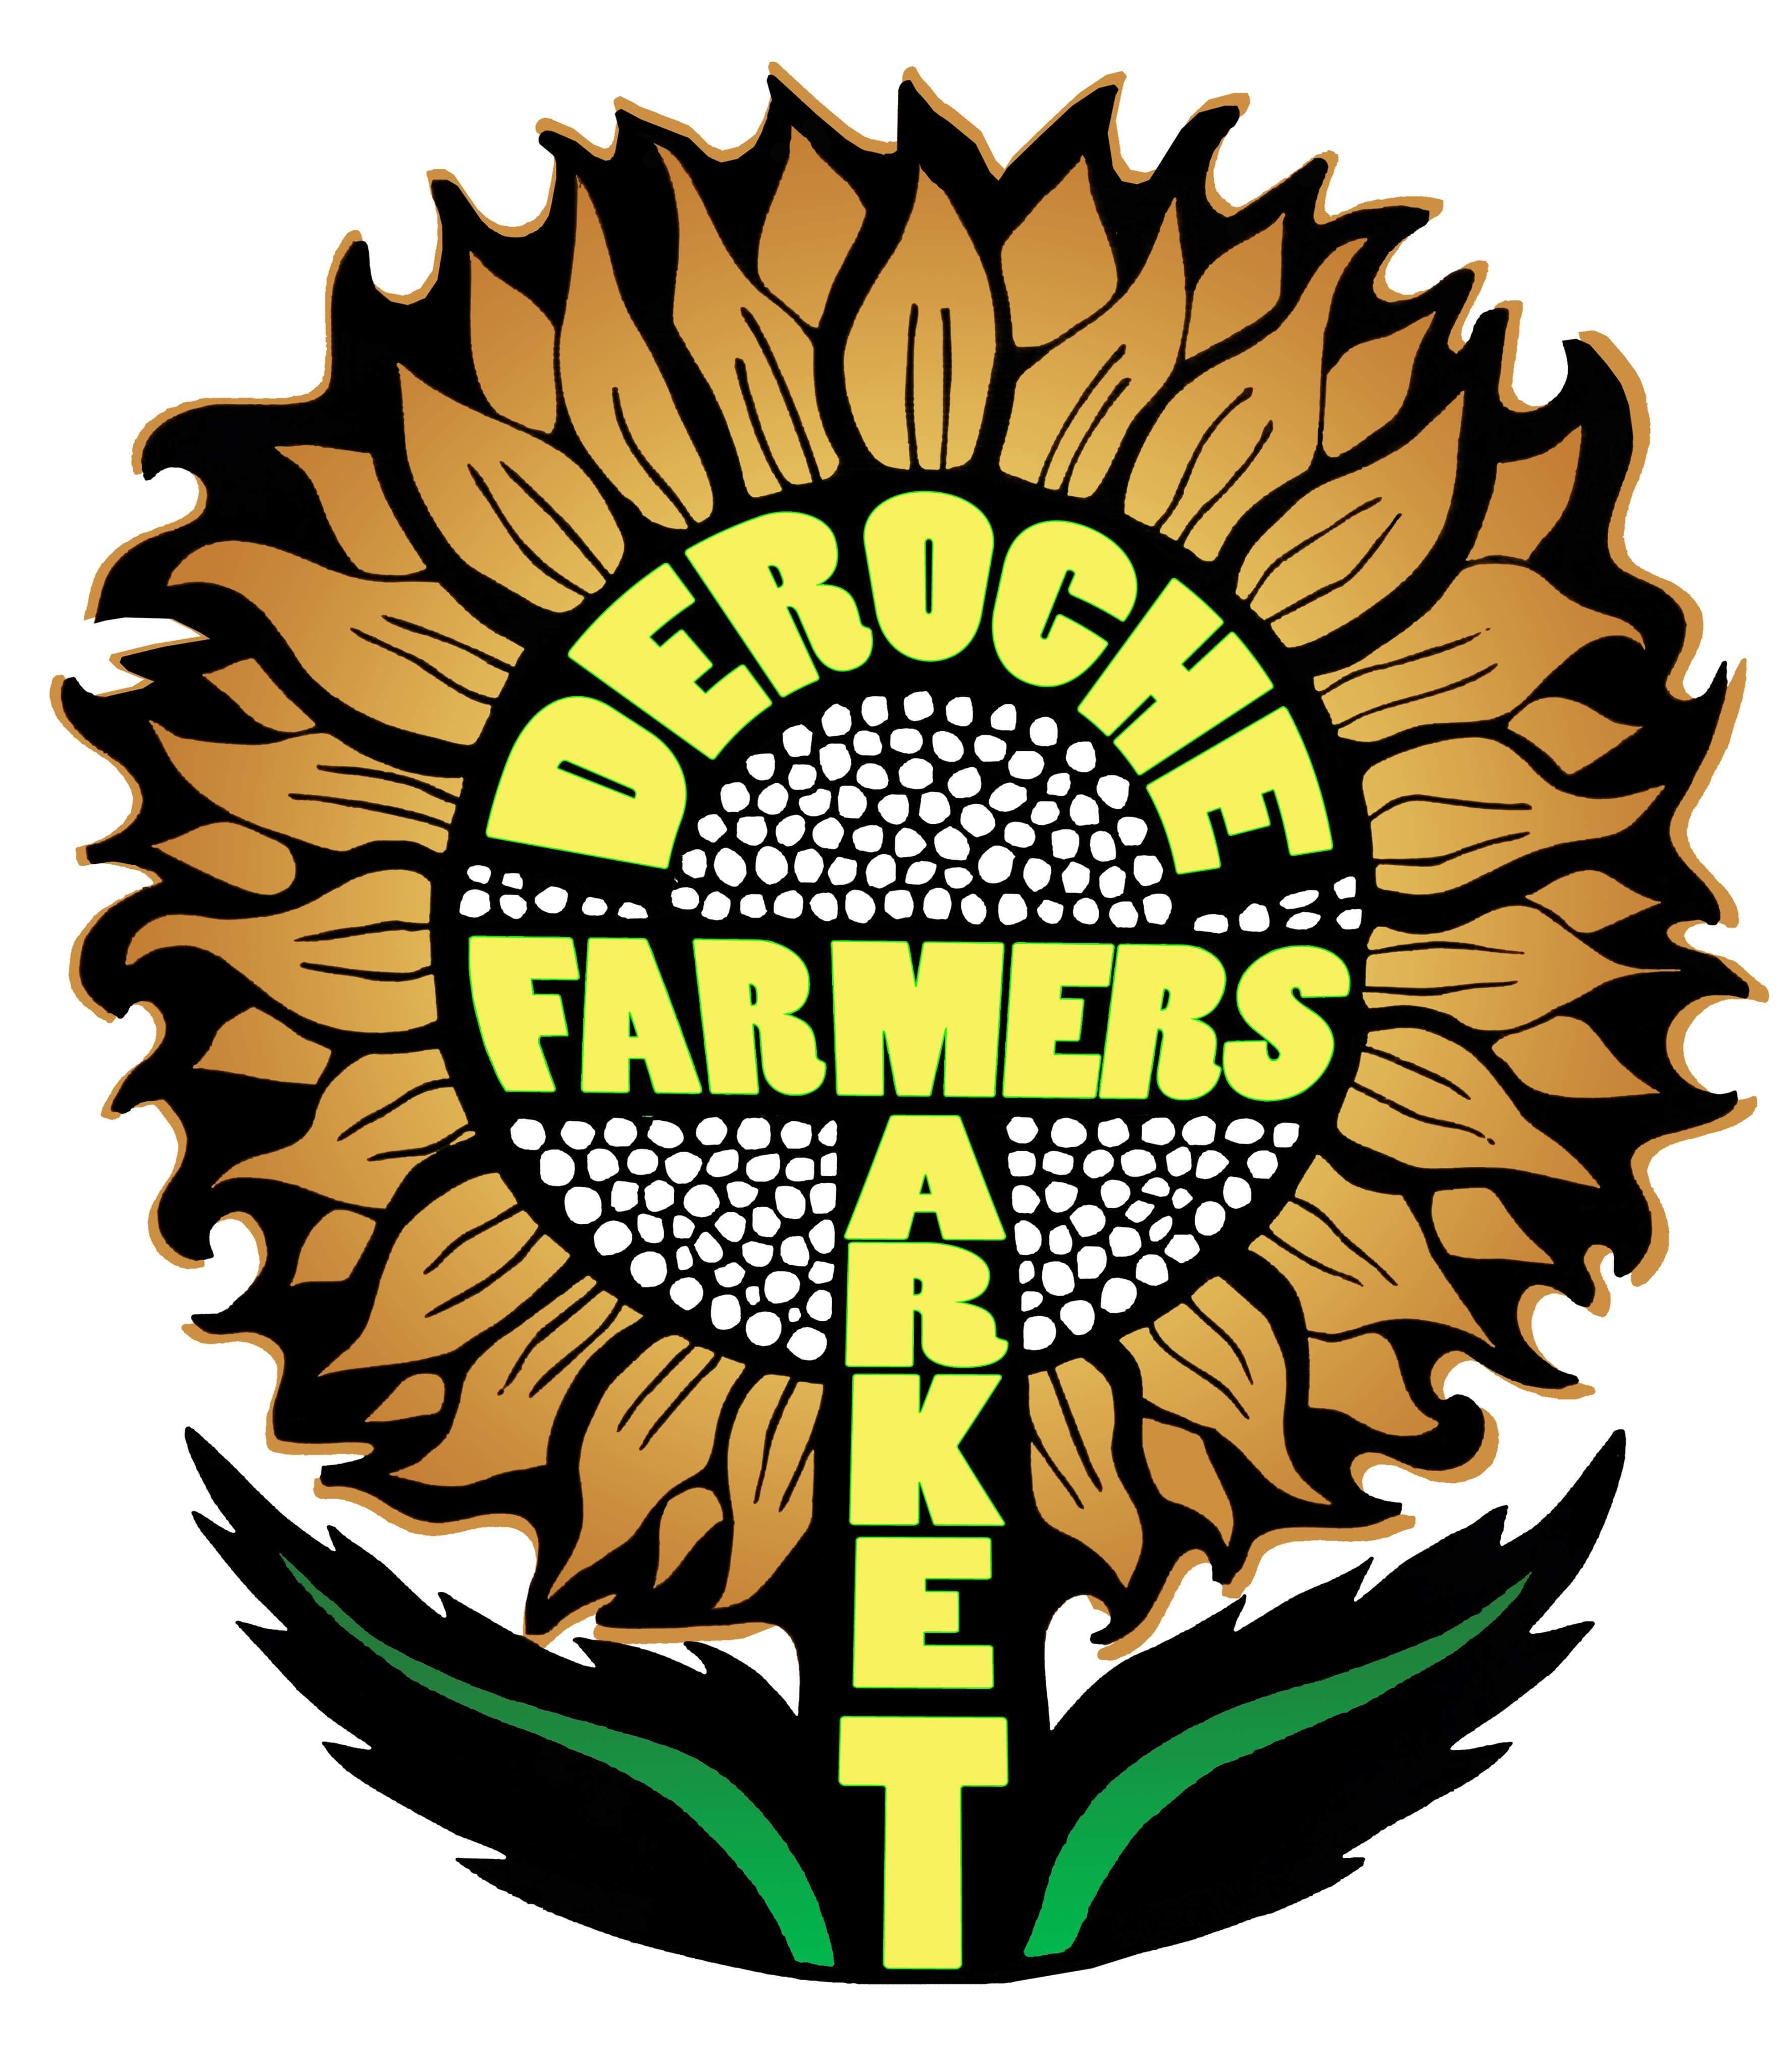 Deroche Farmer's Market runs Saturdays from June to September 10am-2pm at the Deroche FVRD community access center BC Canada